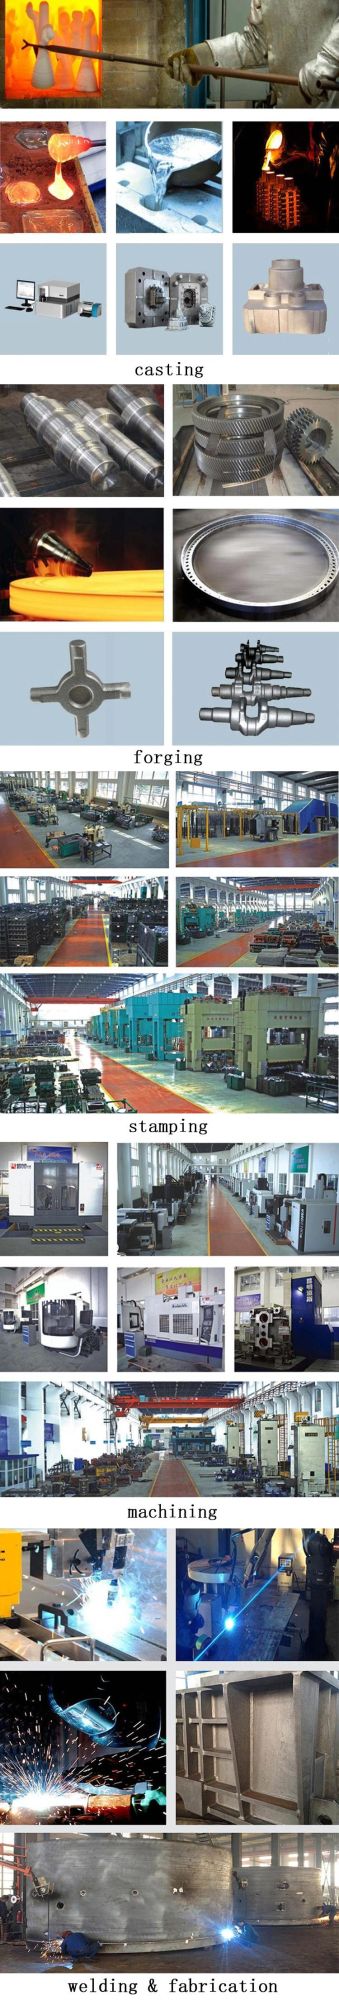 Densen Customized Quality Choice China OEM Metal Sand Casting Ductile Iron